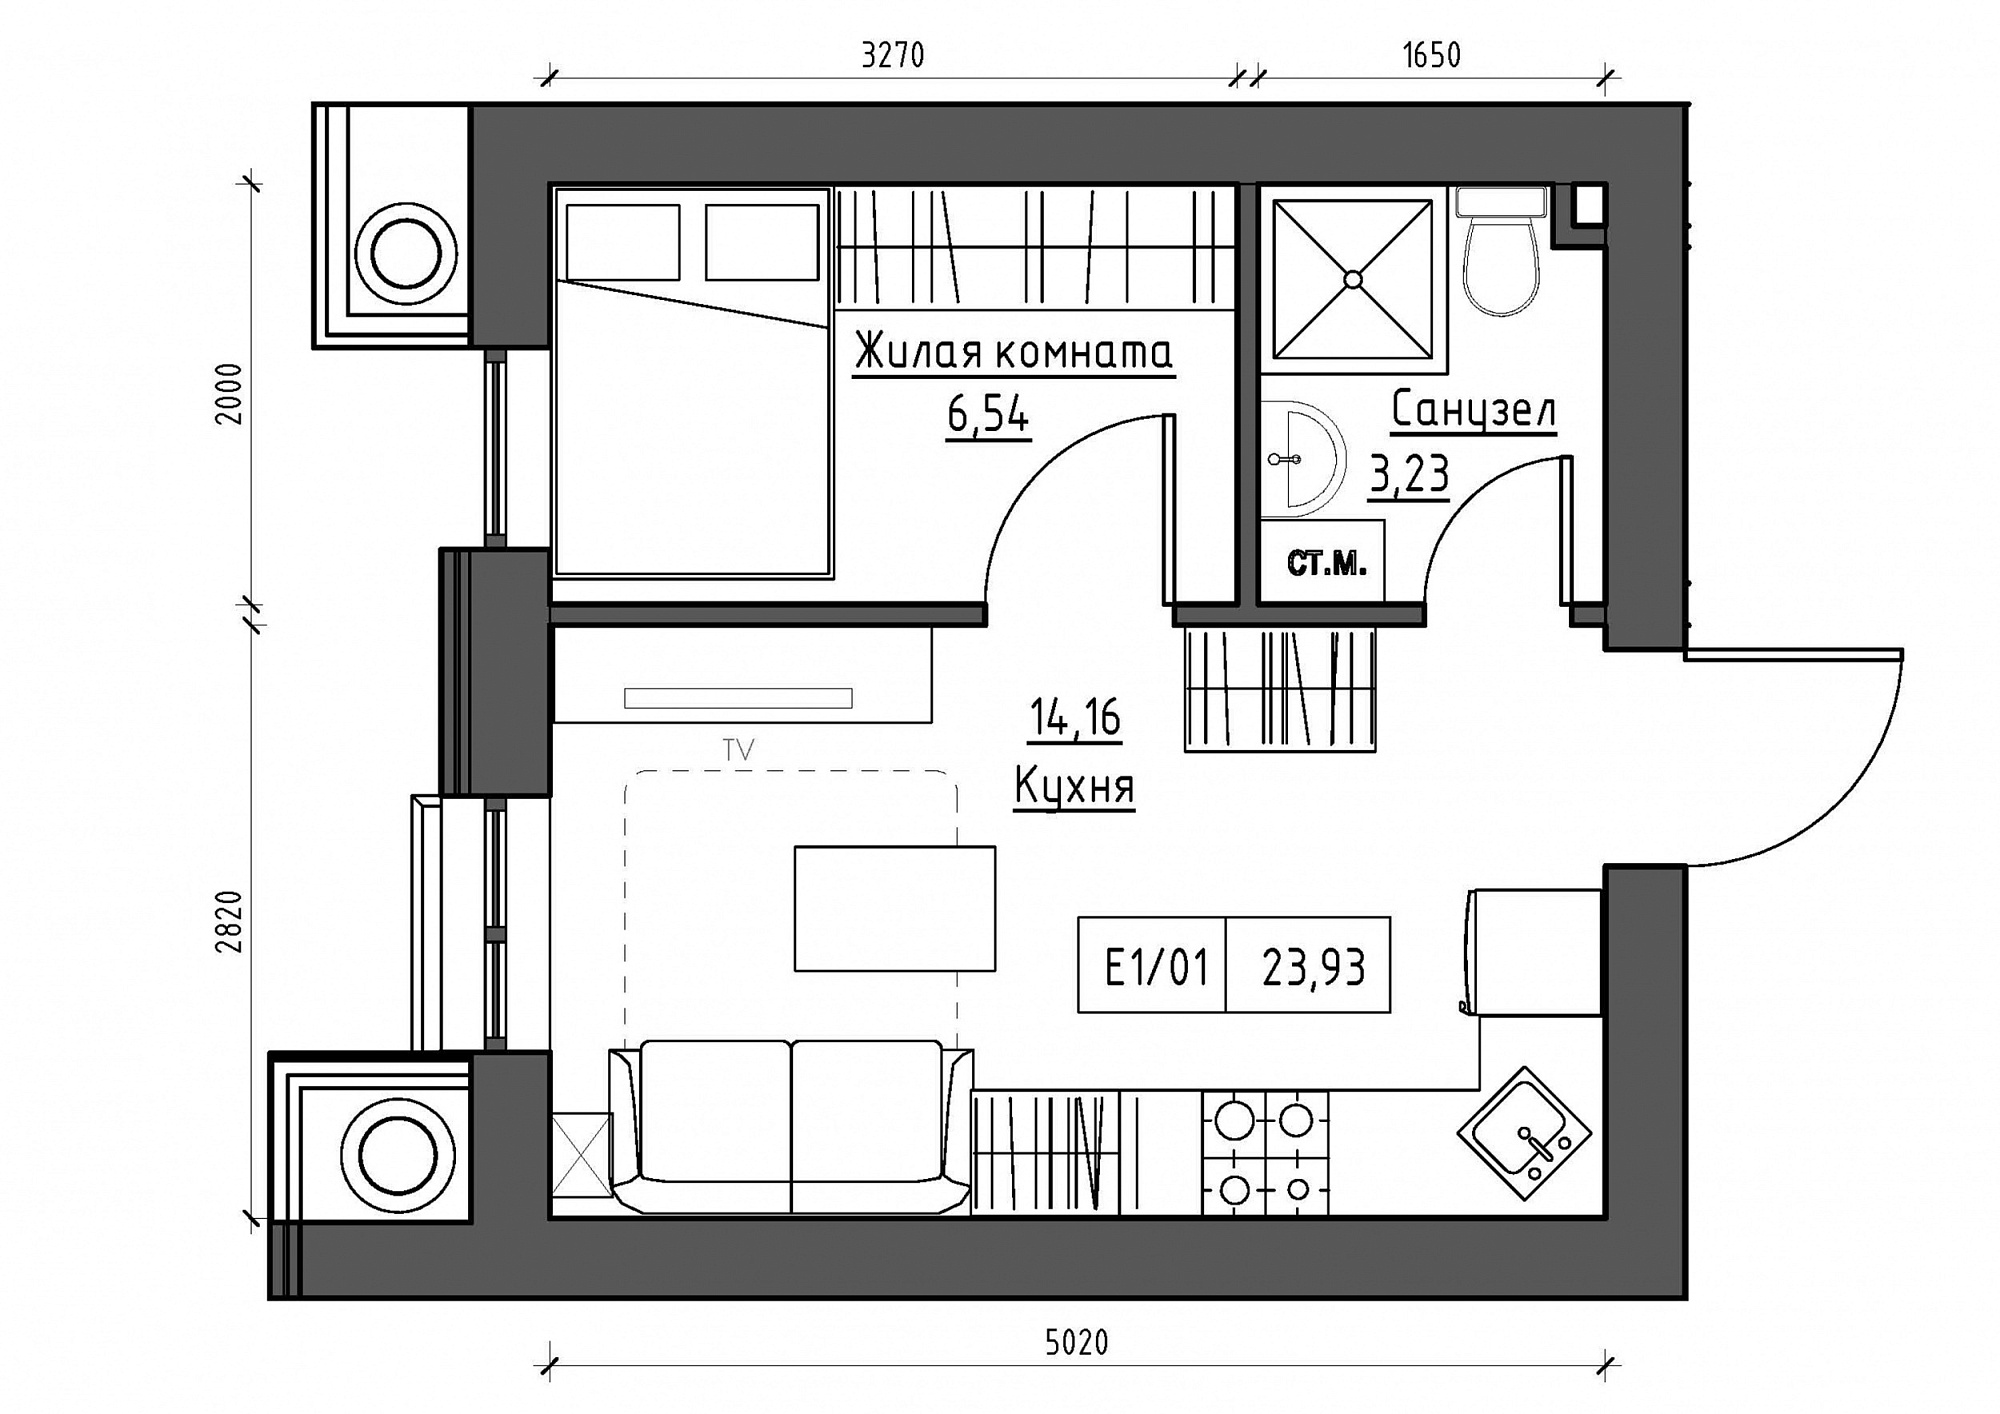 Planning 1-rm flats area 23.93m2, KS-012-01/0012.